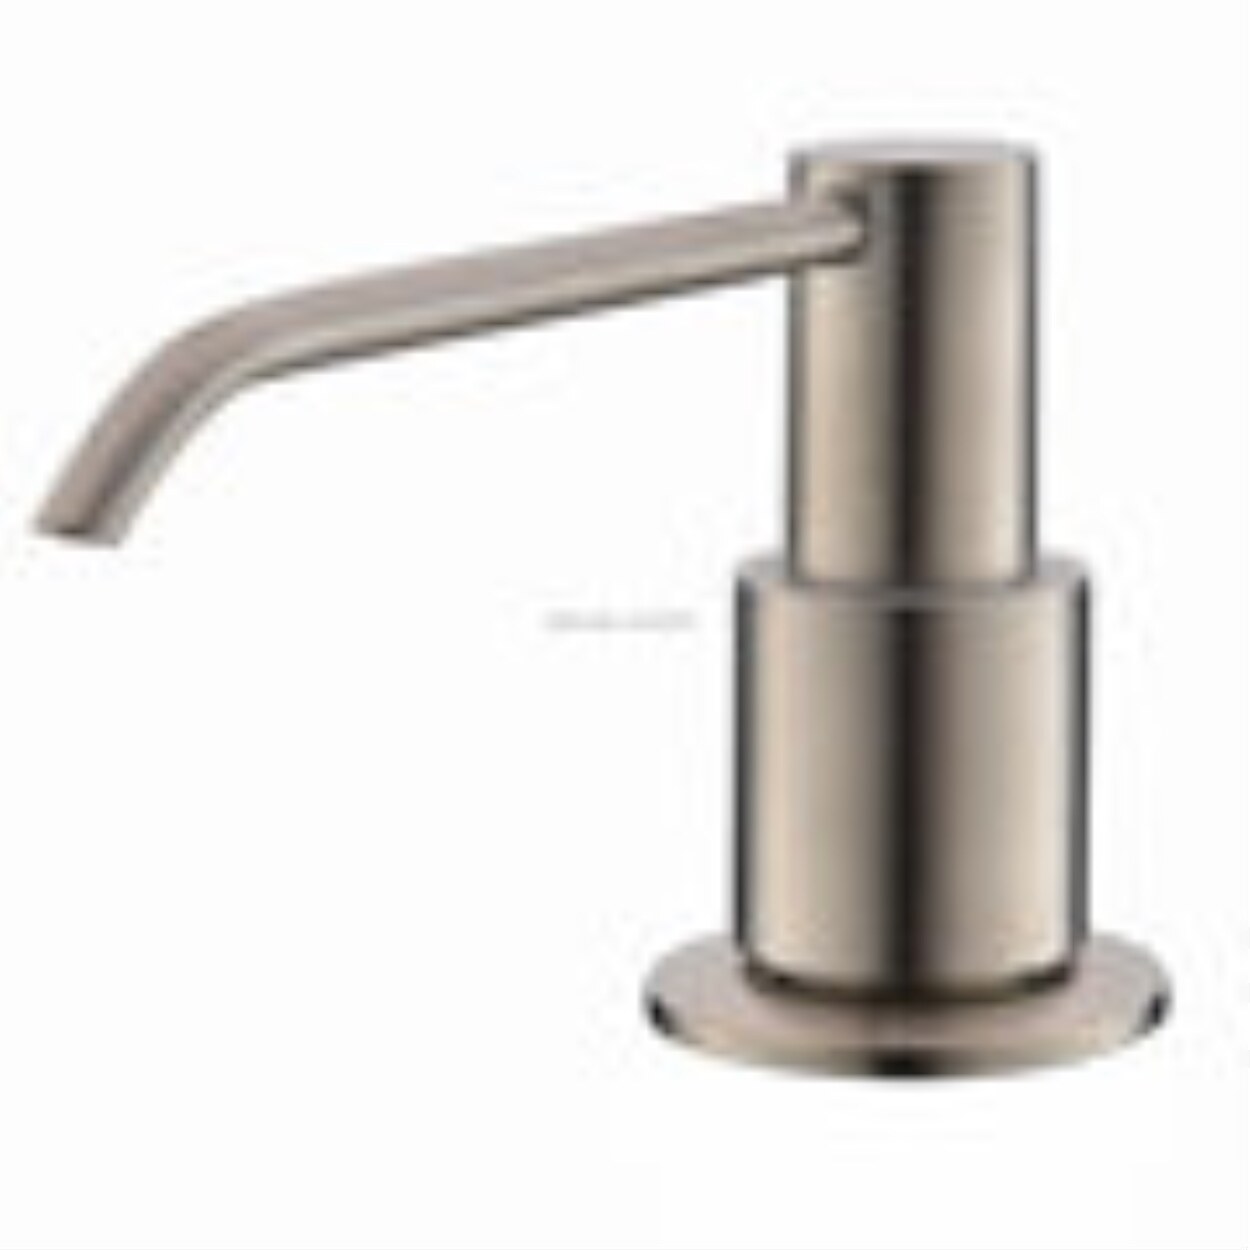 New-Brushed-Nickel-Metal-Stainless-Steel-Kitchen-Sink-Foam-Soap-Dispenser-Built-In-Hand-Soap-Dispenser.jpg_120x120.jpg